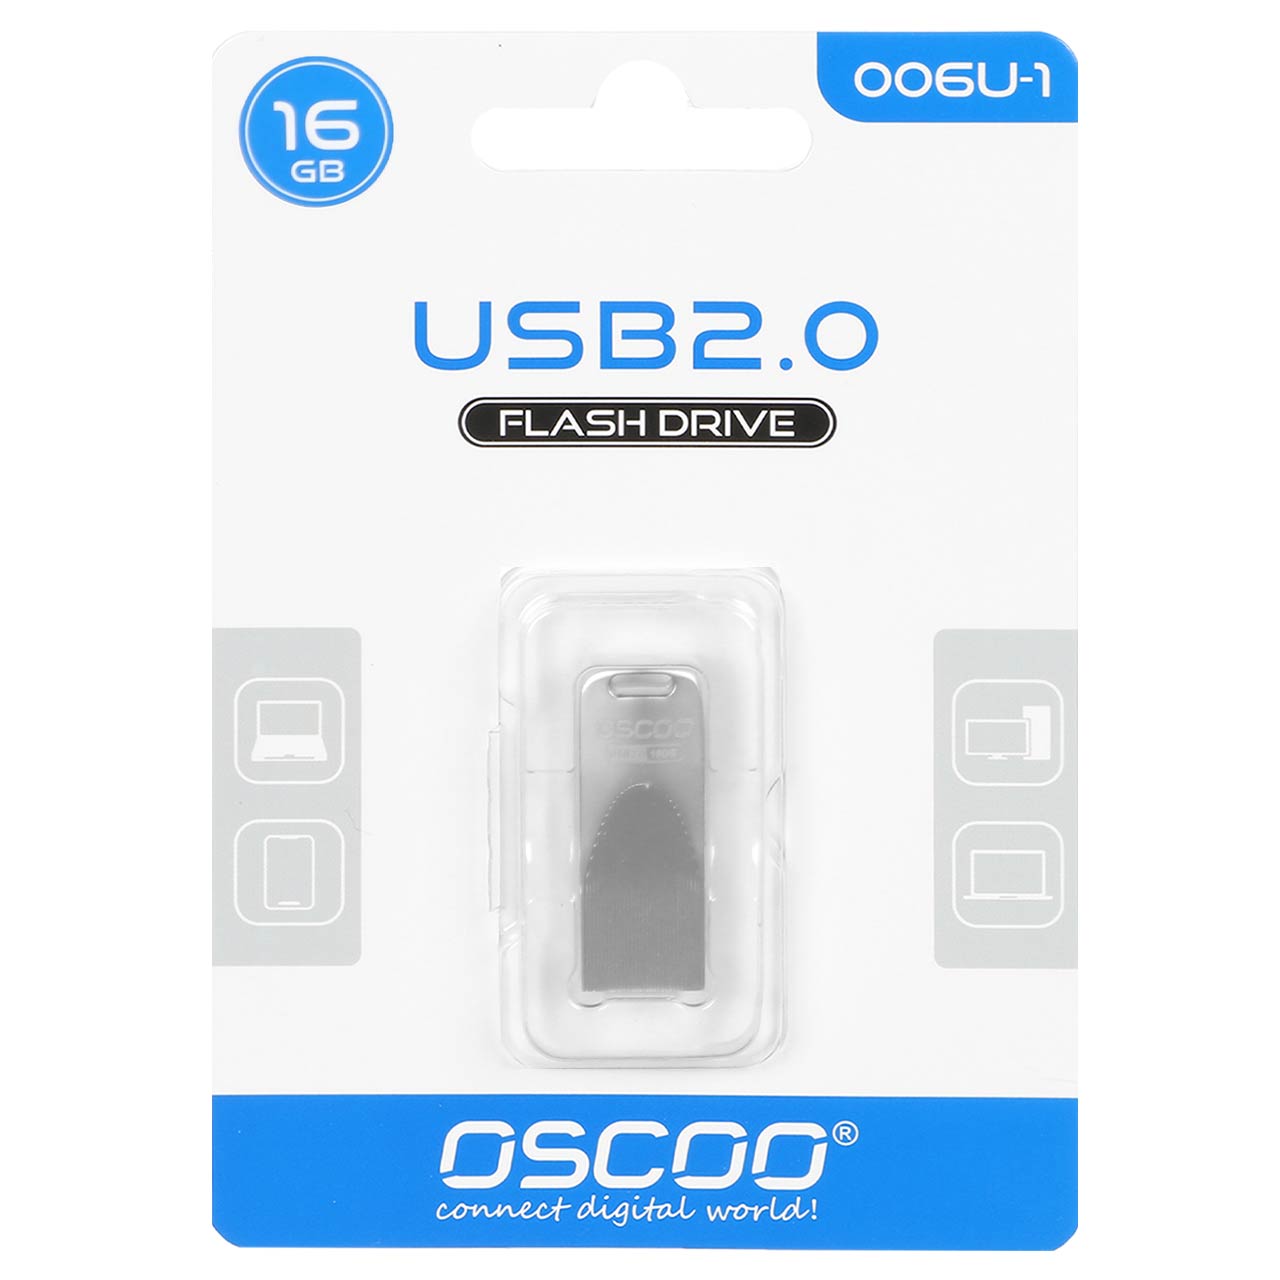 OSCOO 006U-1 USB2.0 Flash Memory-16GB نقره ای (گارانتی سورین)